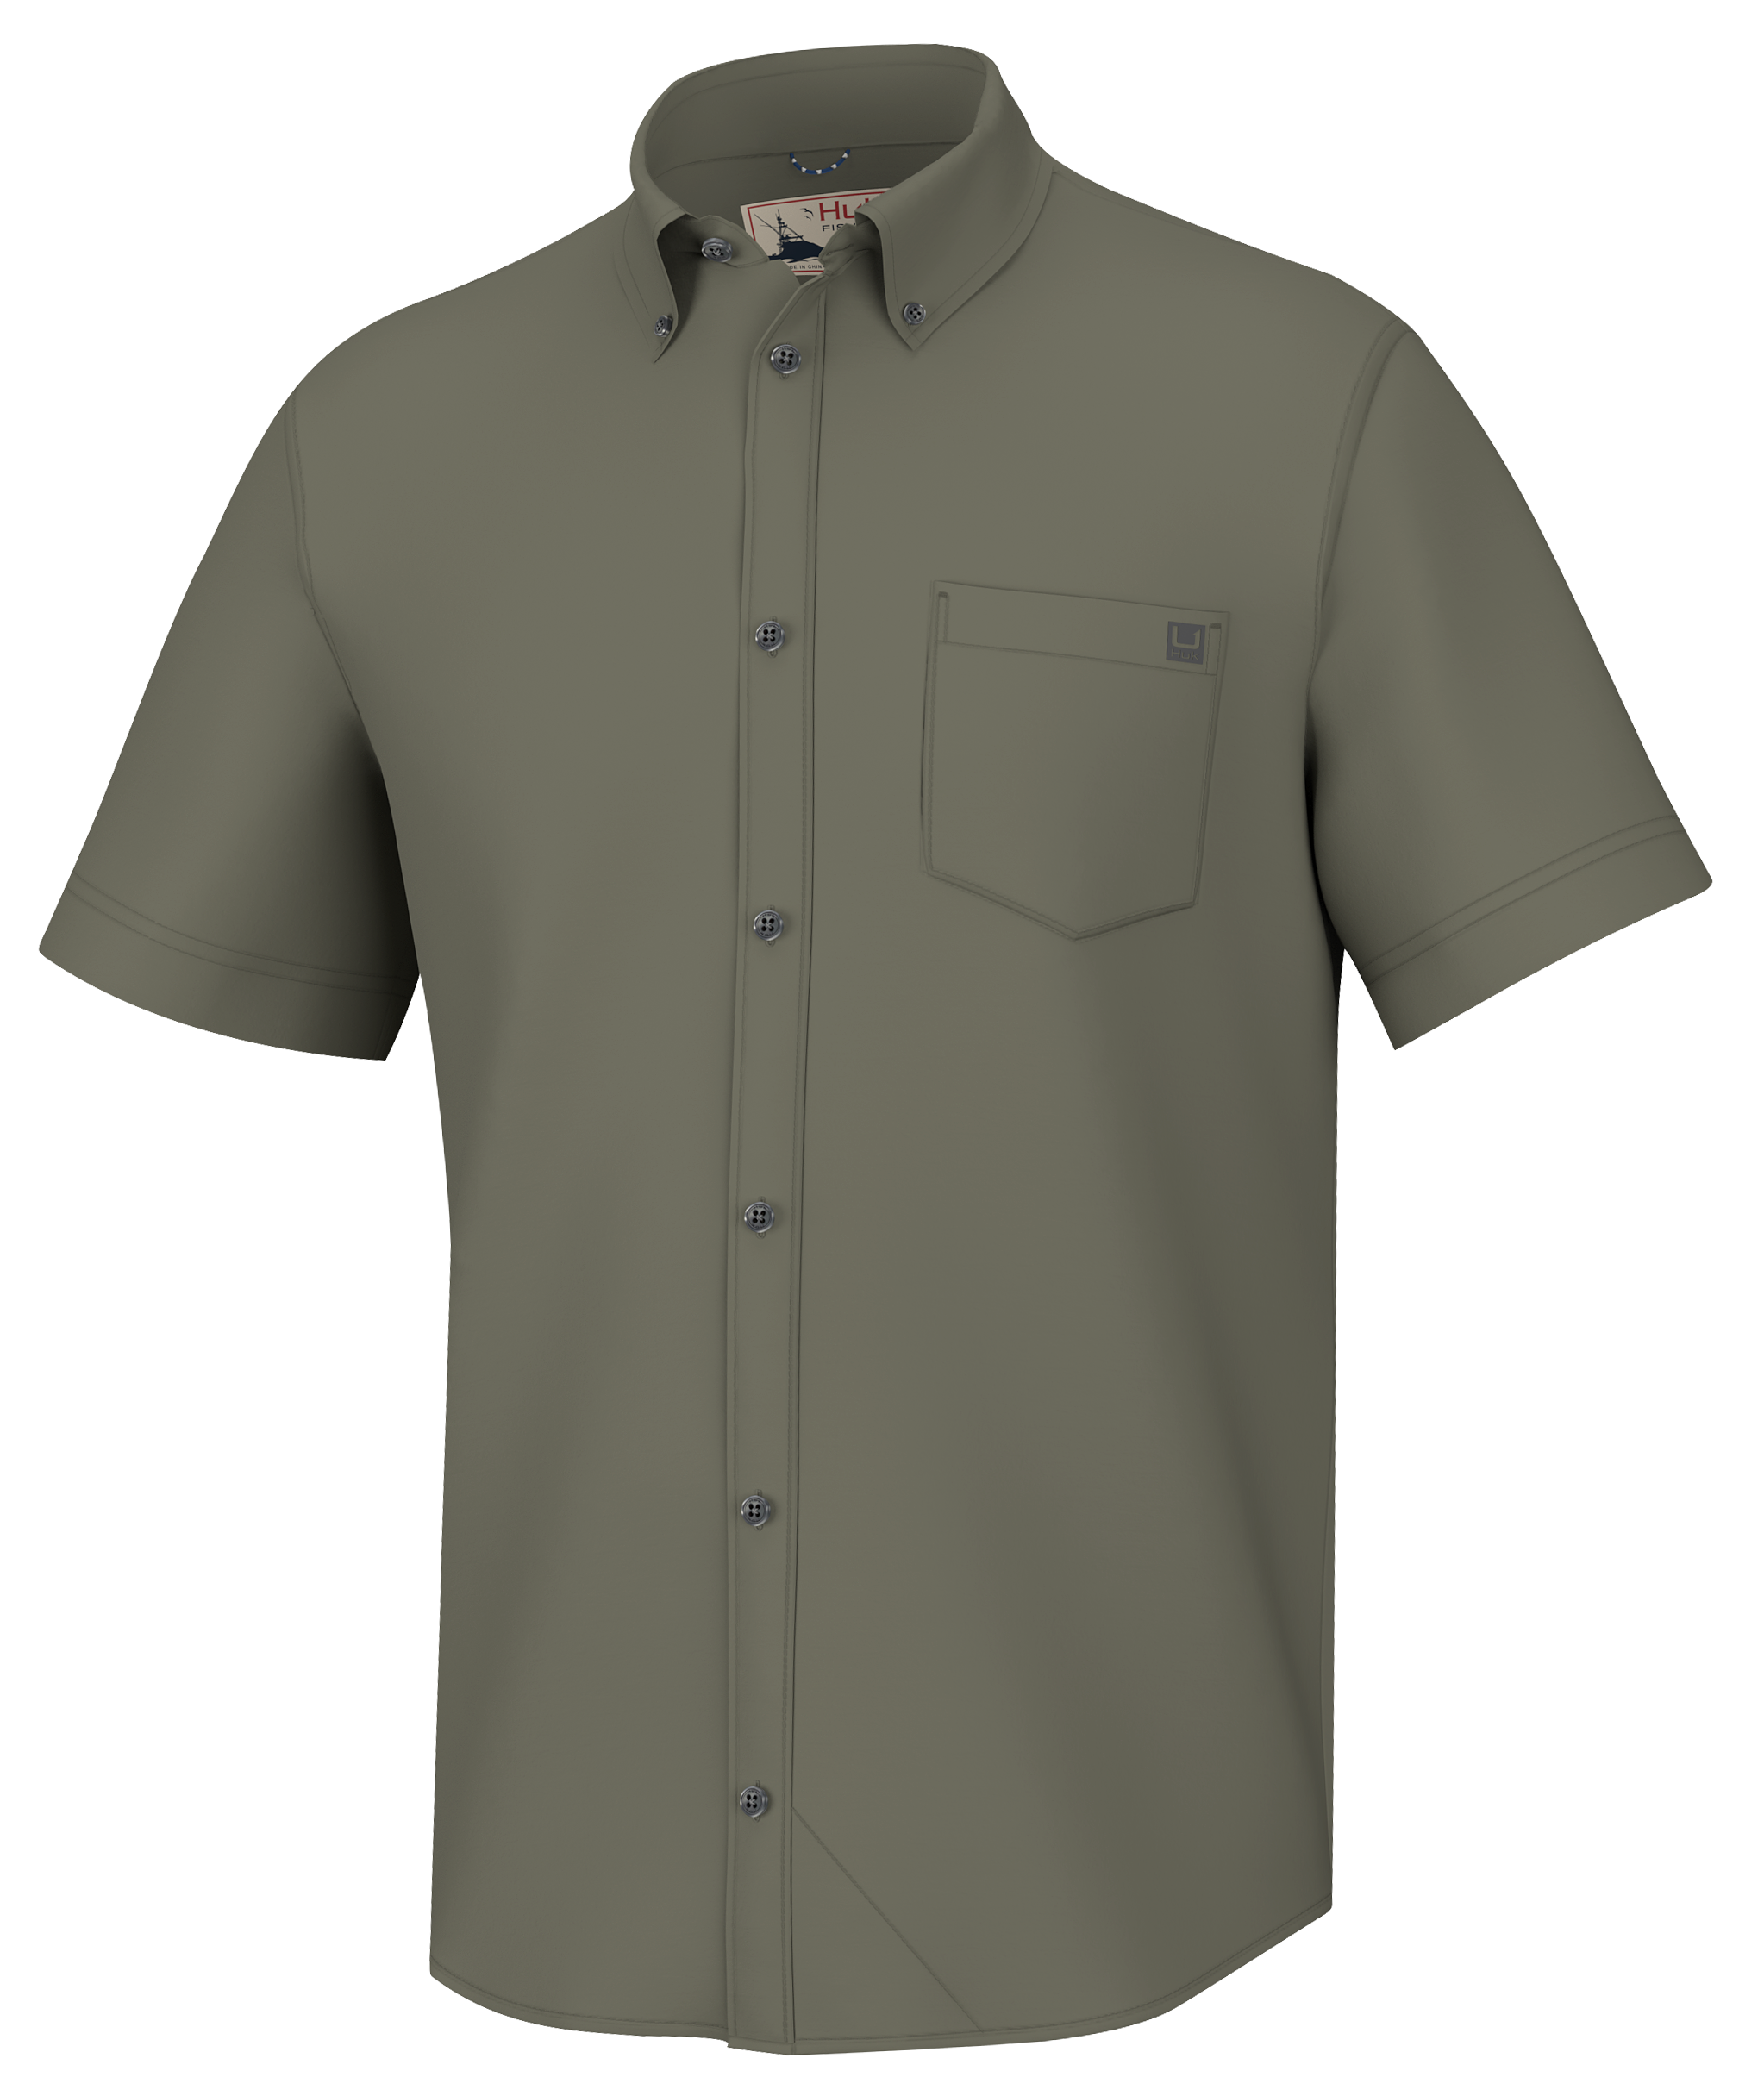 Huk Kona Fish Beach Freedom Short-Sleeve Button-Down Shirt for Men